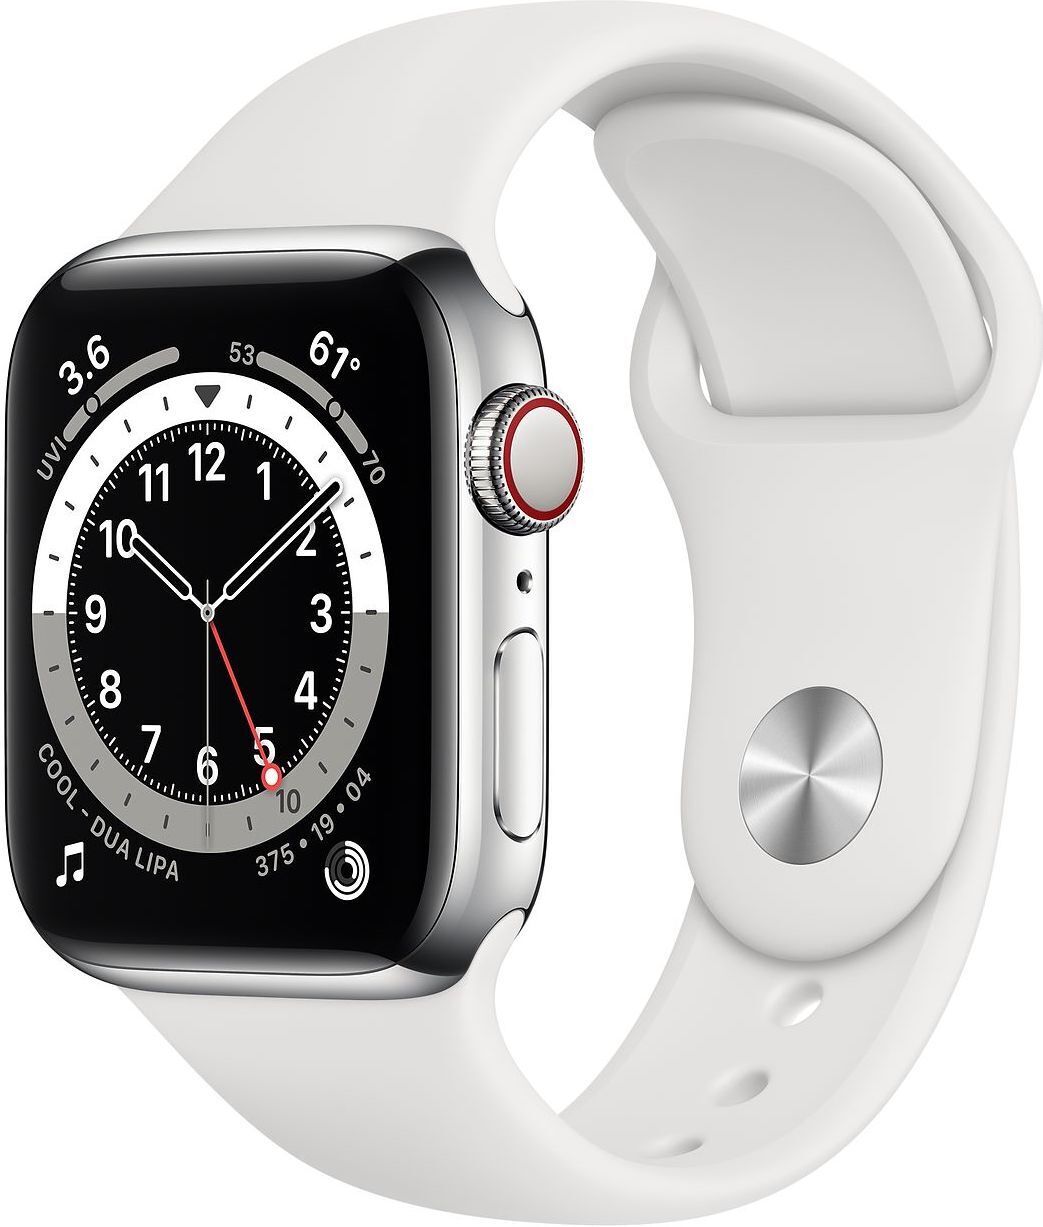 Apple watch SE1 40MM 44MM GPS+Cellular Unlocked Space Gray 